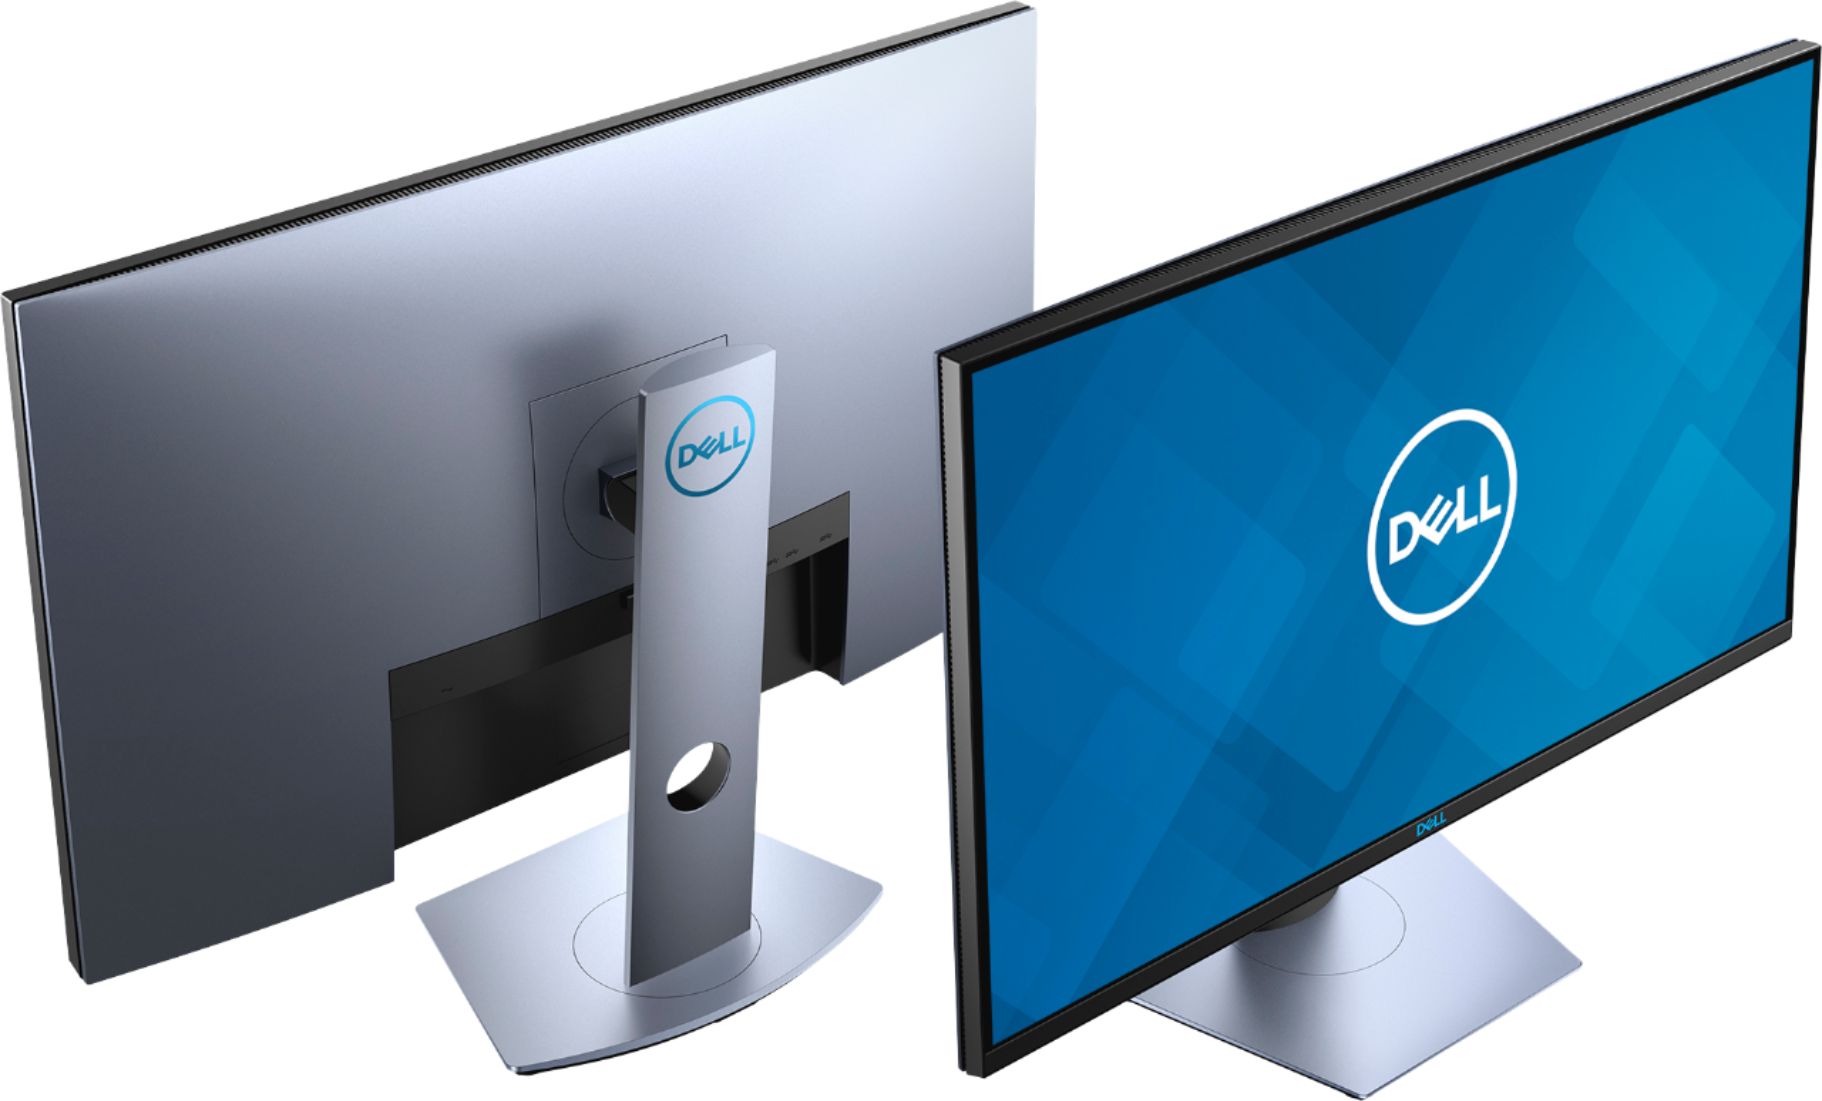 Dell 1440p @ 155Hz Monitor hits $300. dell 1440p 144hz ips monitor. 